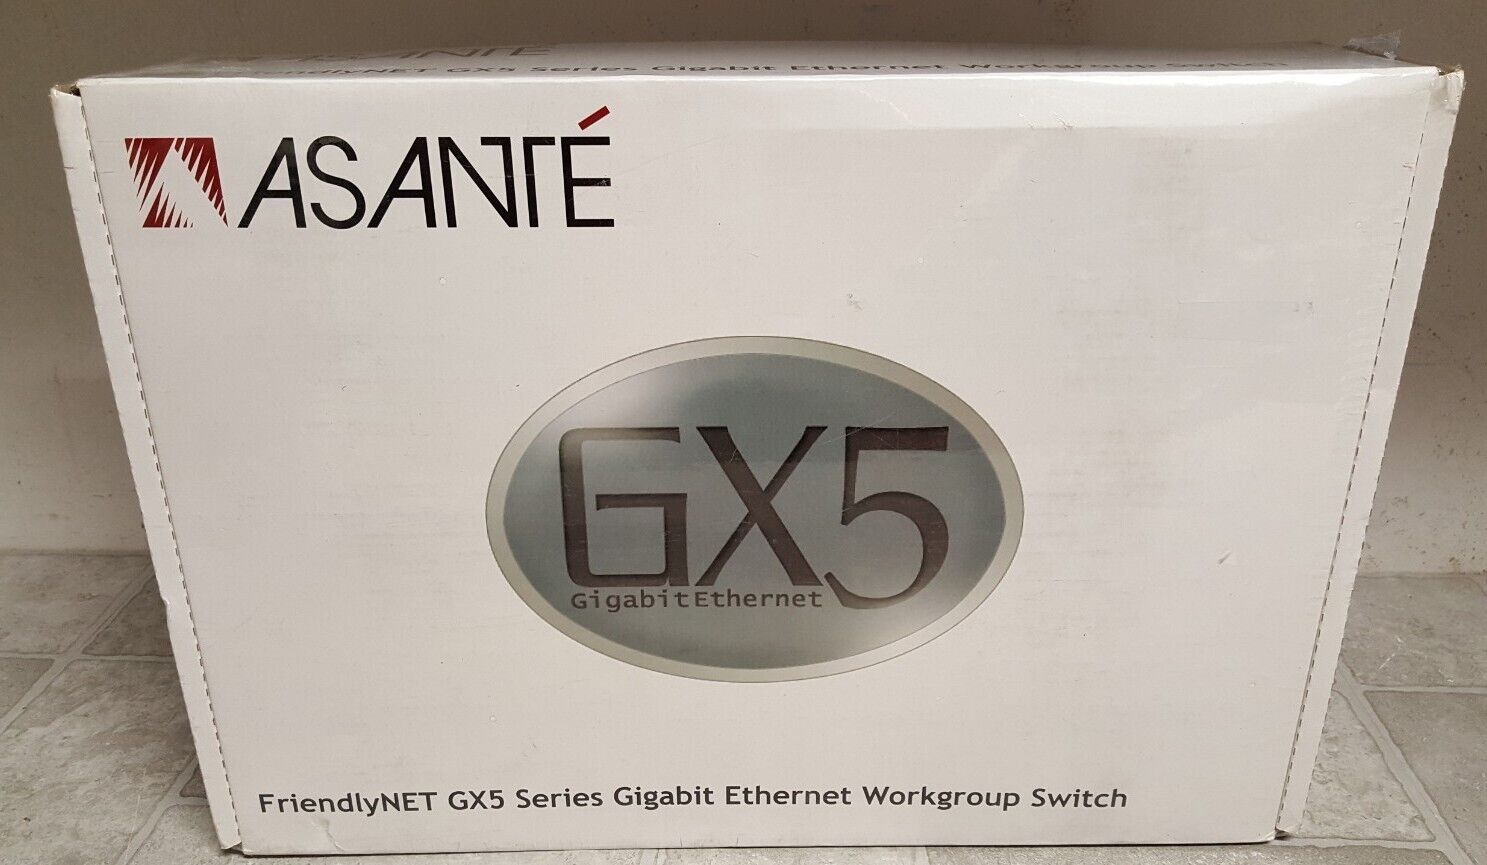 BRAND NEW Asante Gx5-800 Gigabit